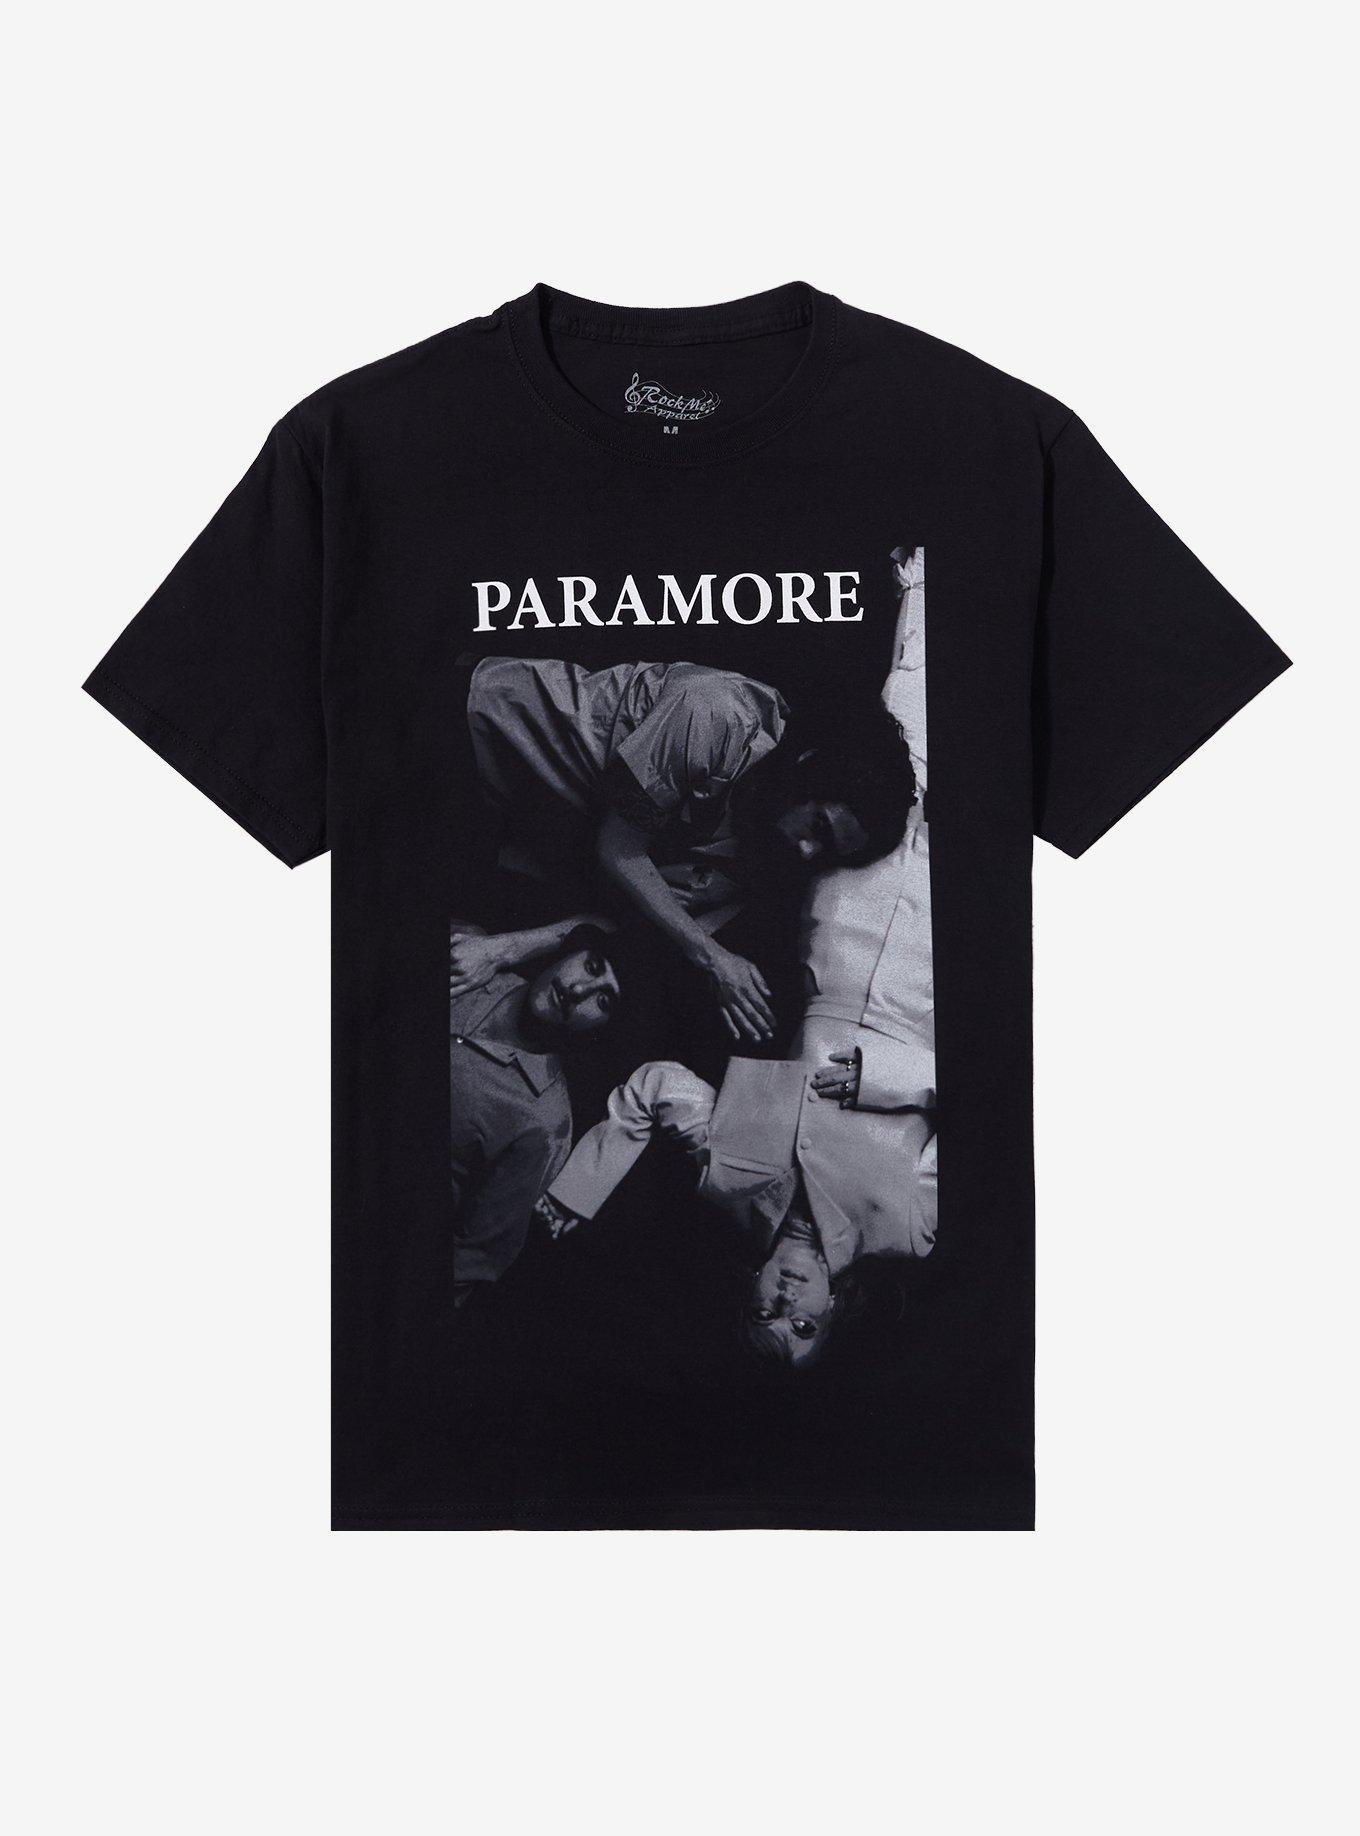 Paramore Black & White Band Photo T-Shirt, BLACK, hi-res